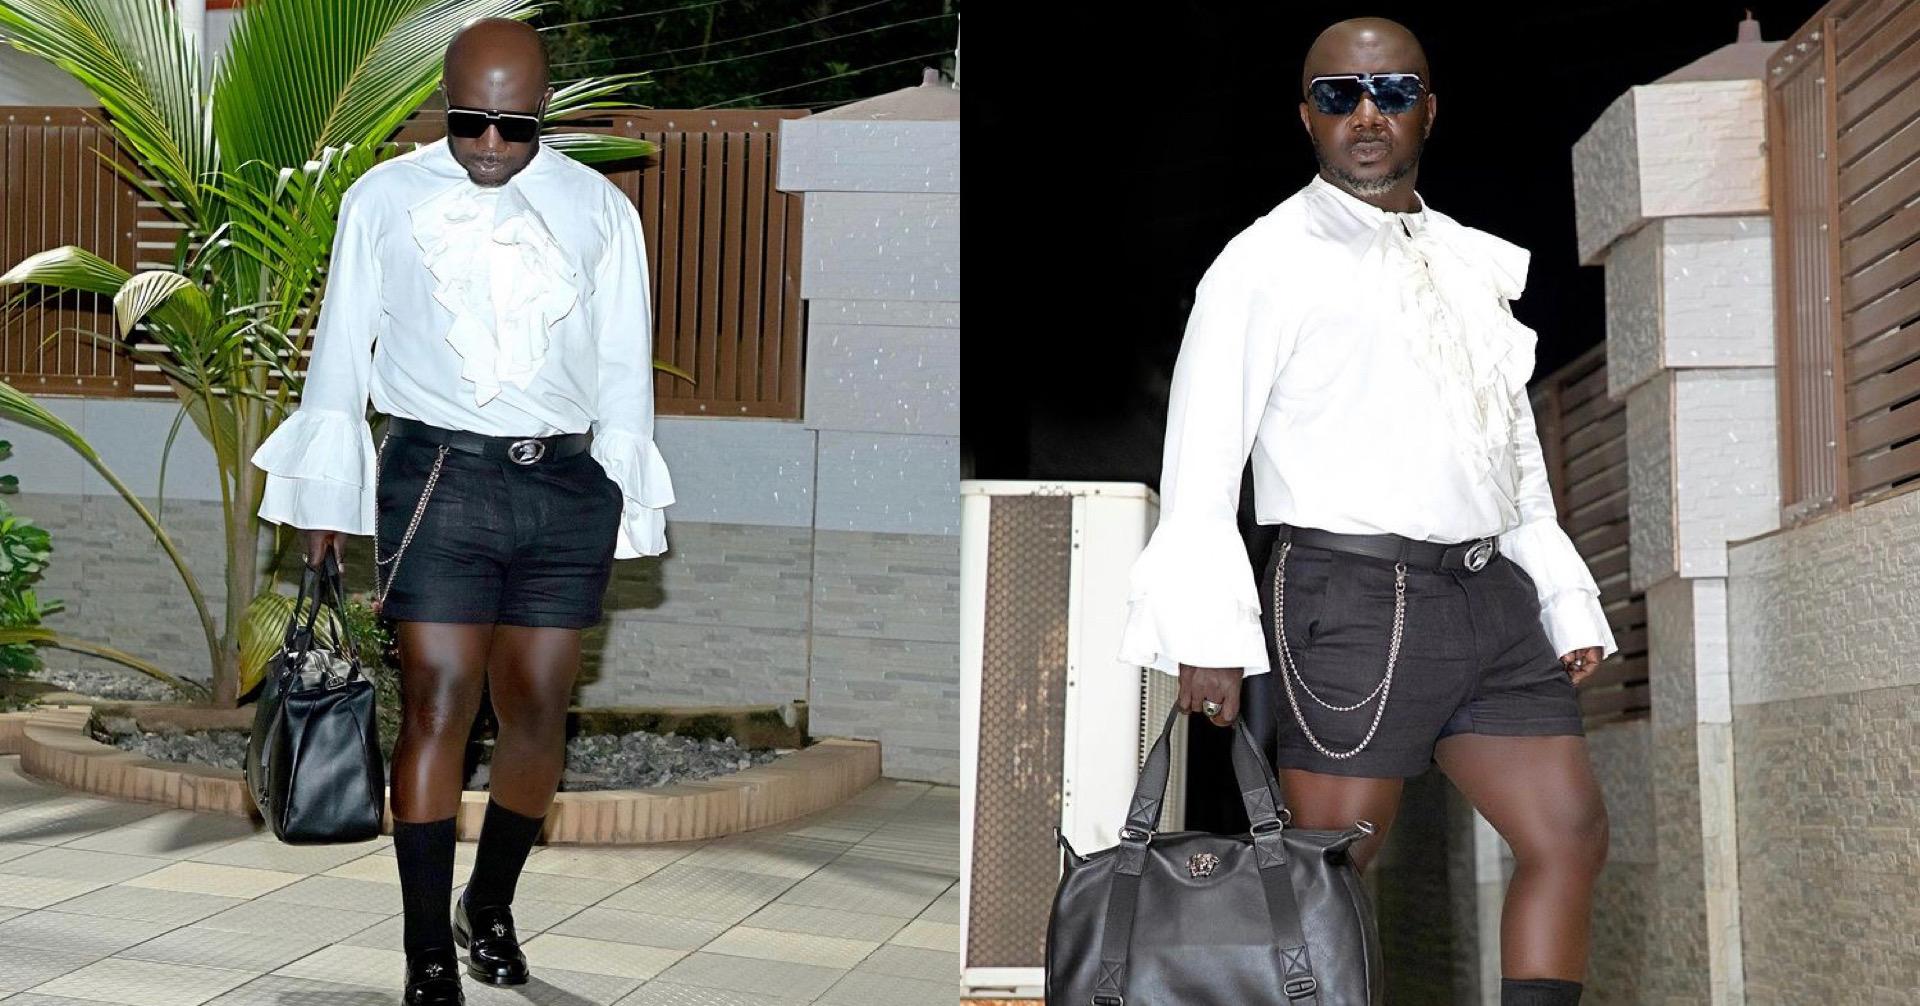 Fashion or M@dness – Osebo stuns social media again with his strange dressing (see Photos)